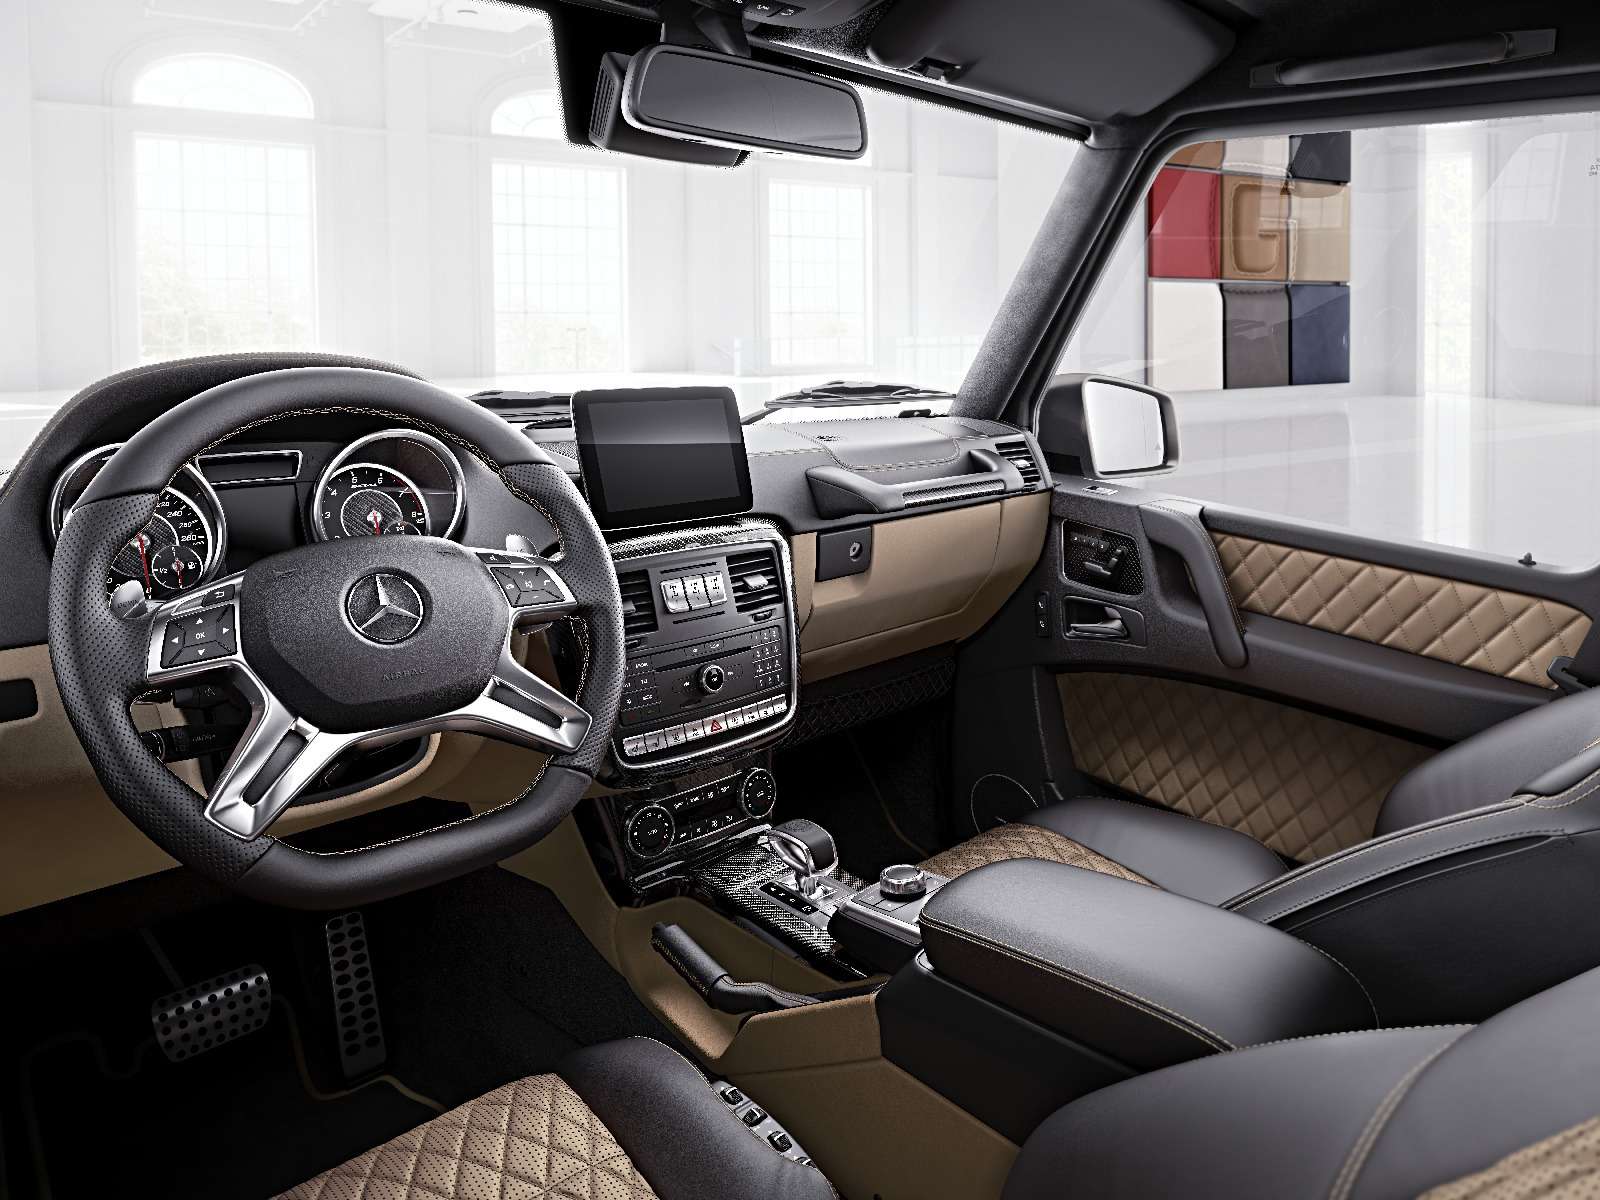 Mercedes-AMG G 65 Exclusive Edition: последняя гастроль? — фото 745730